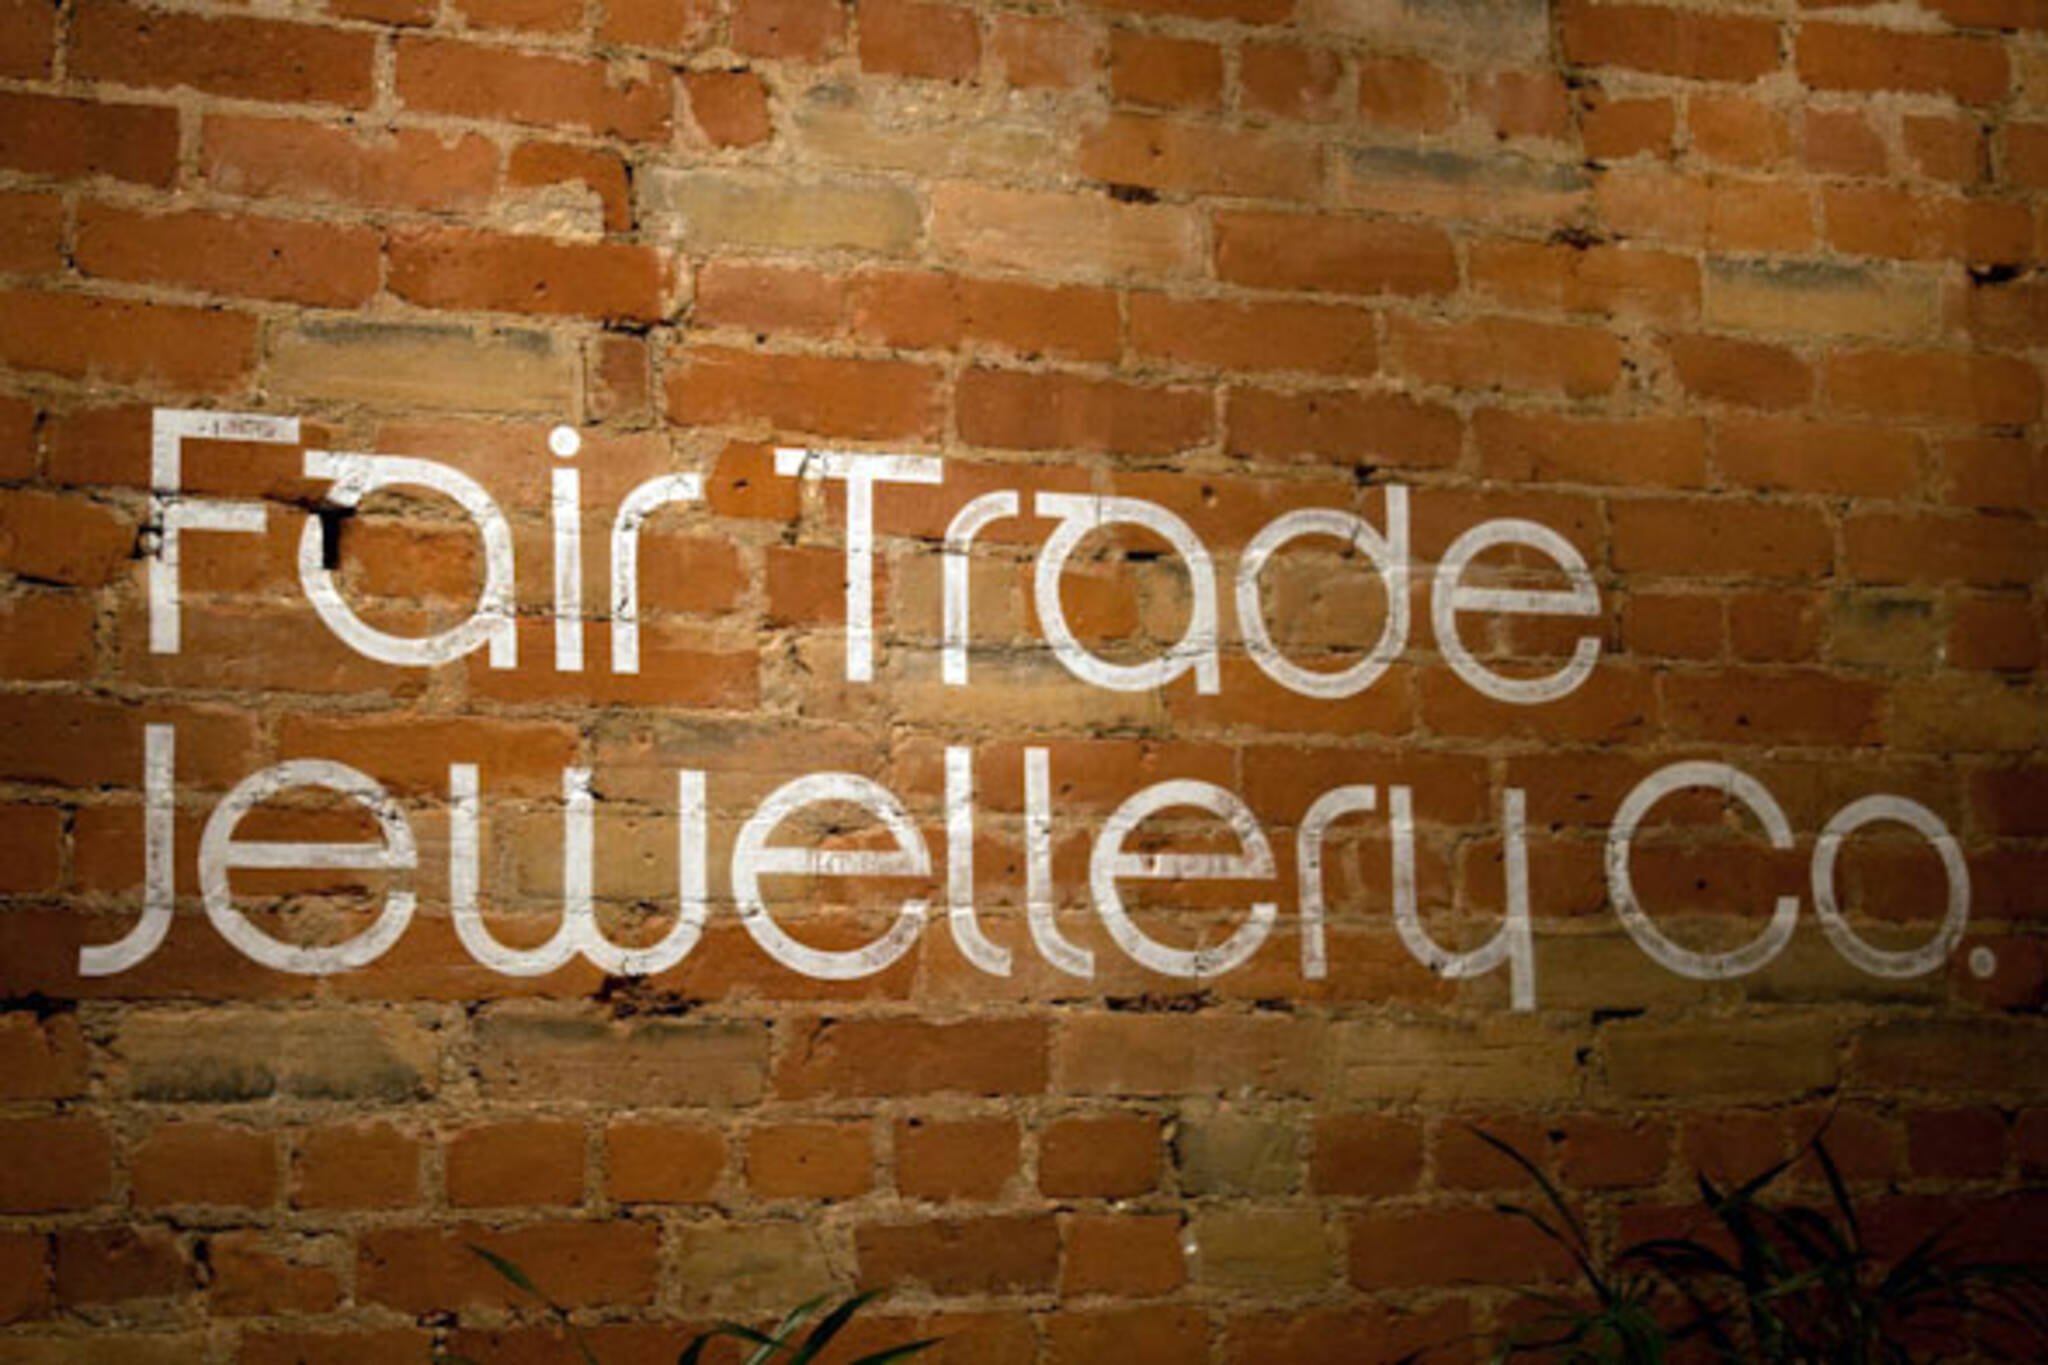 Fair Trade Jewellery Toronto